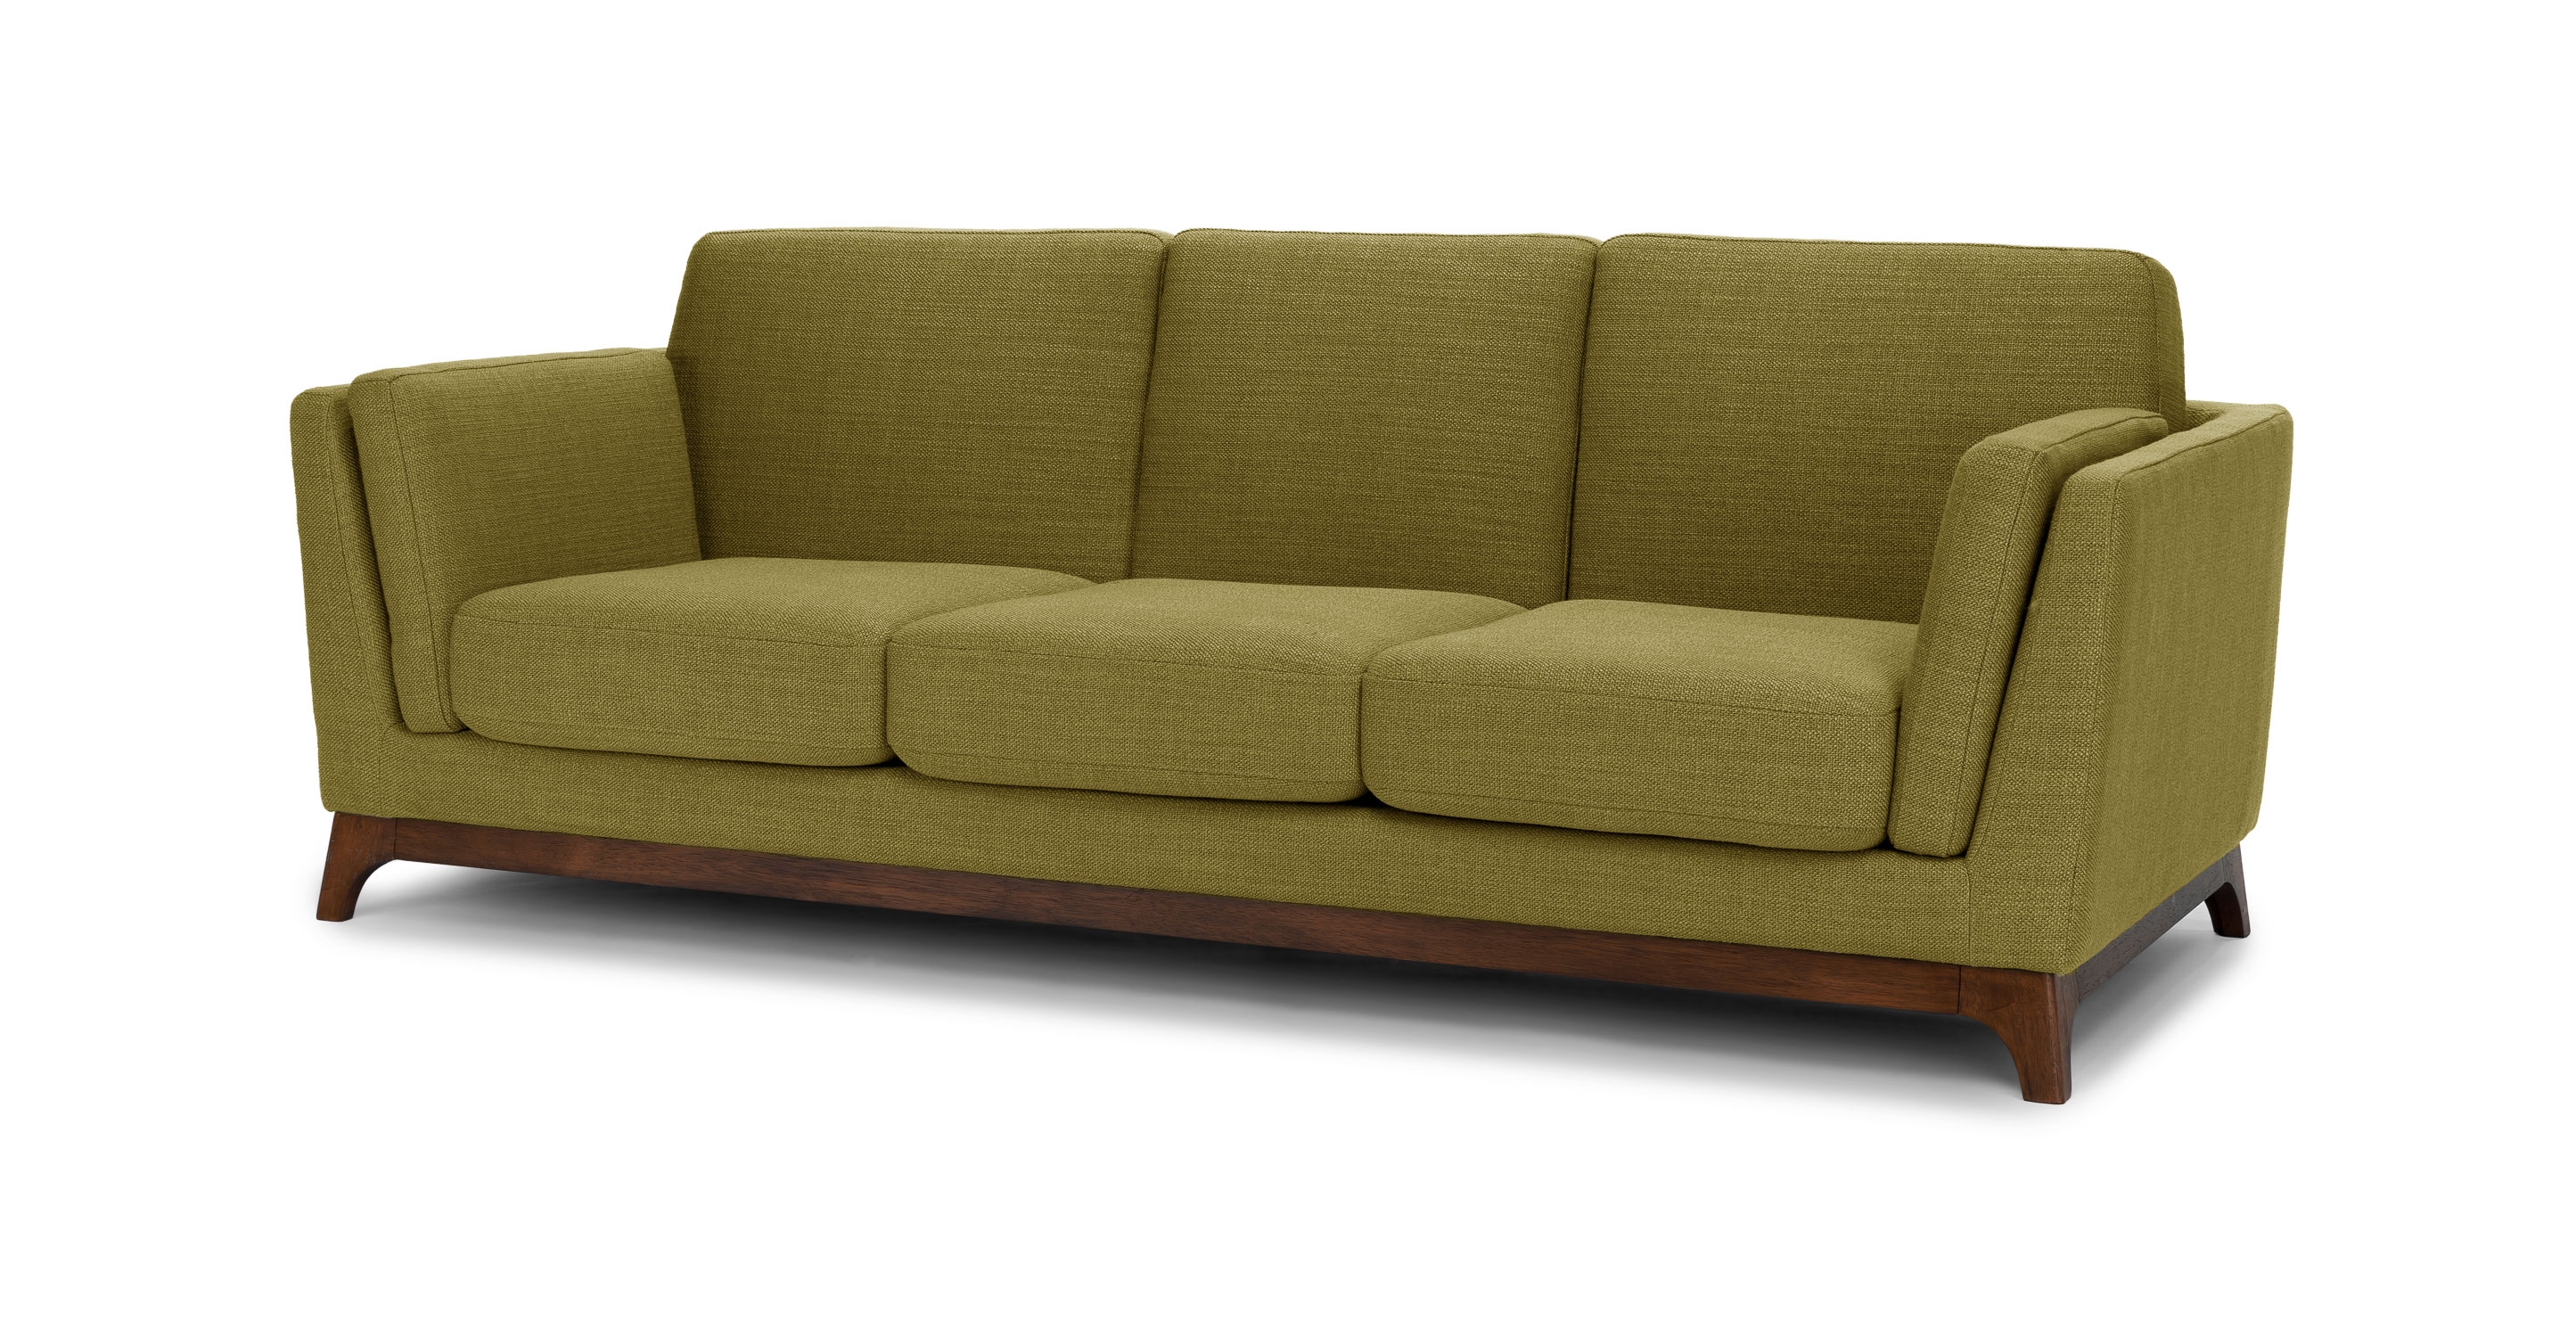 Ceni Seagrass Green Sofa - Image 1